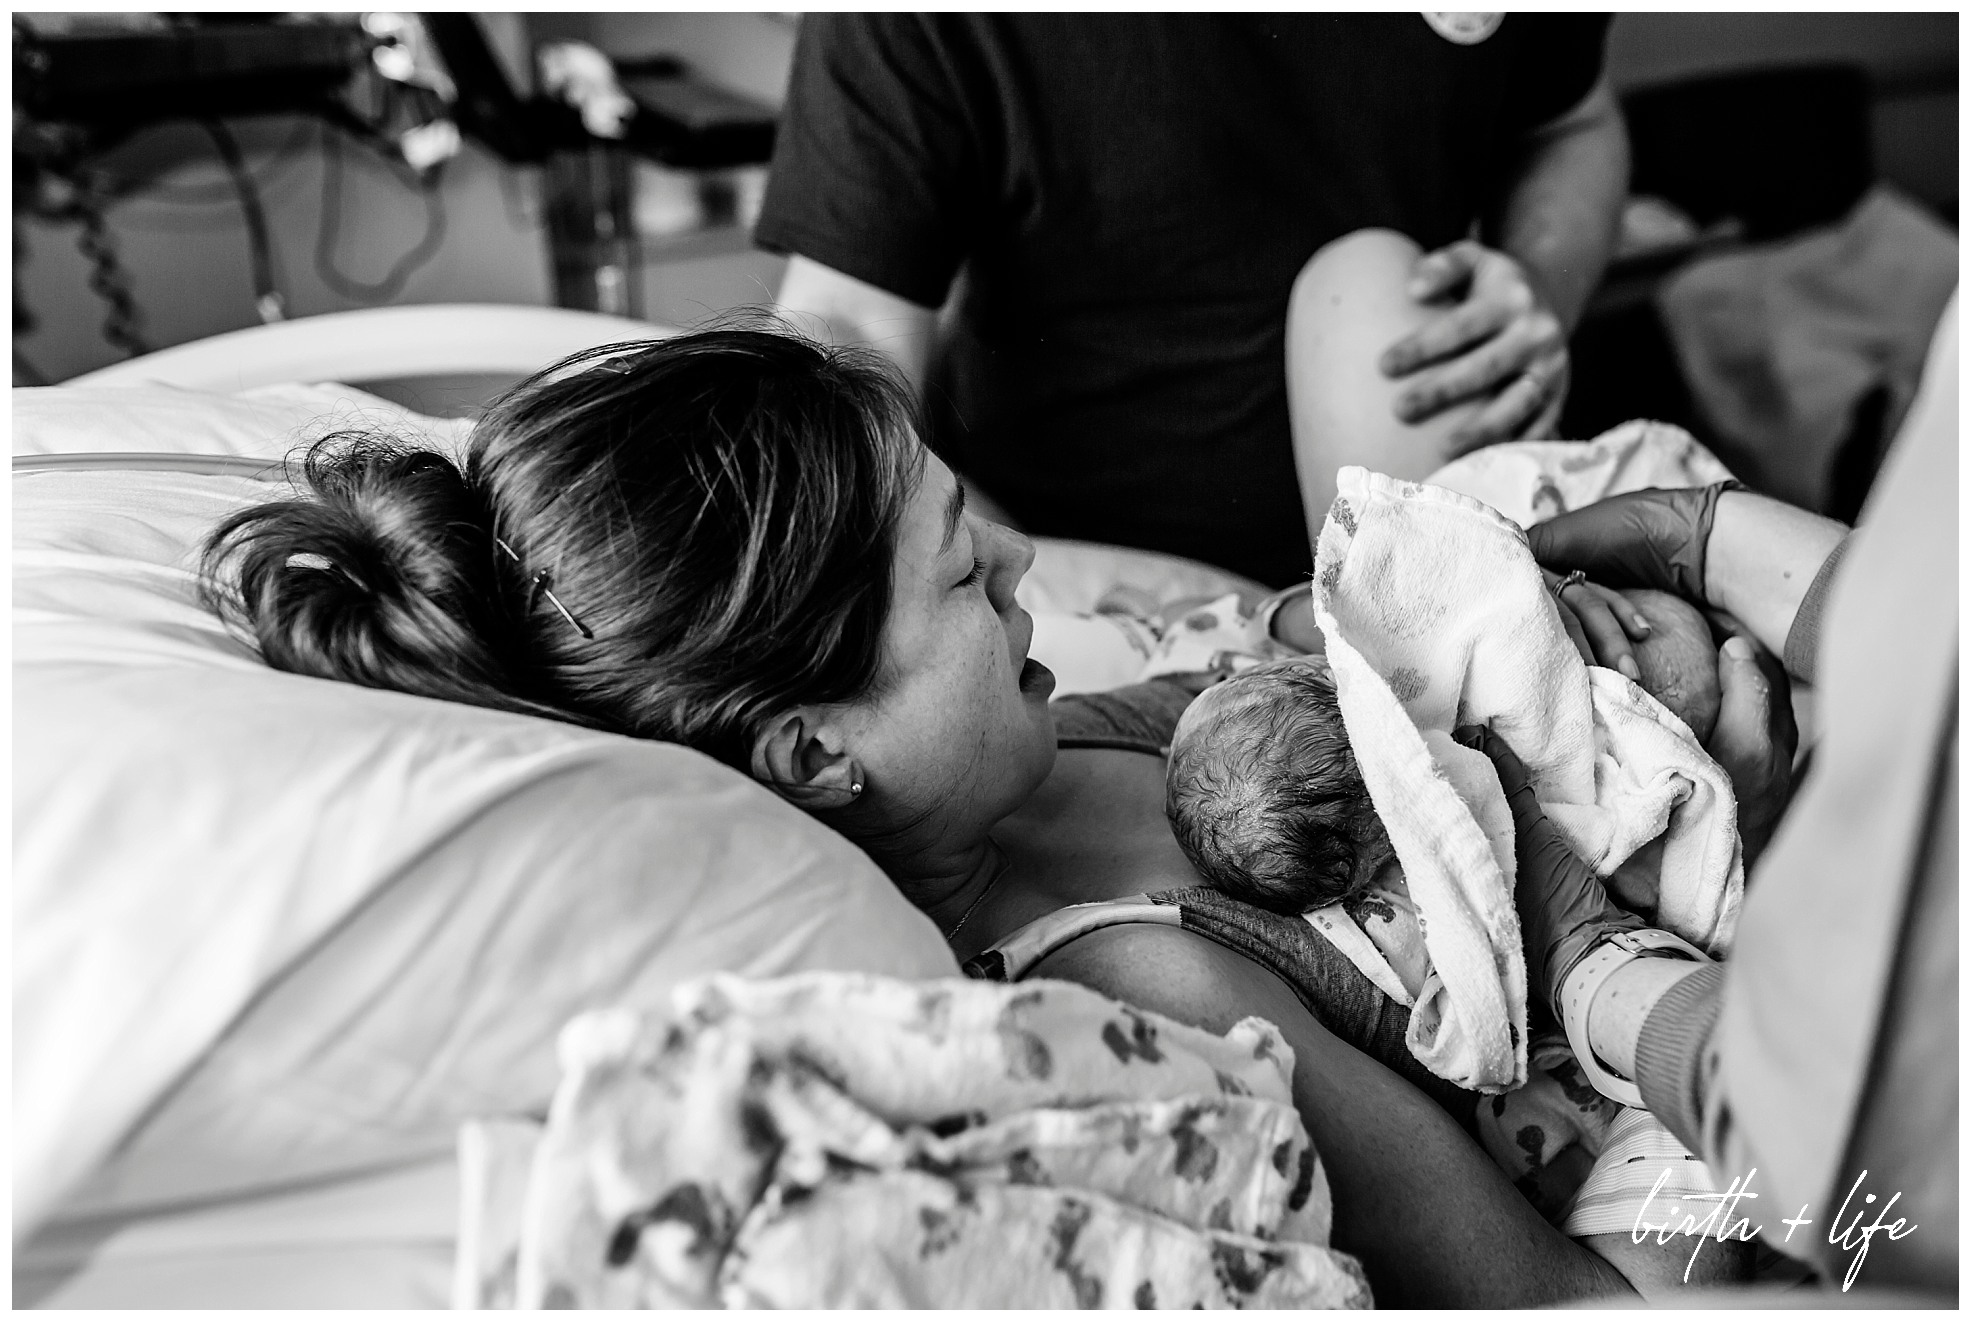 dfw-birth-and-life-photography-family-photojournalism-documentary-birth-storyacclaim-midwives-clark028.jpg